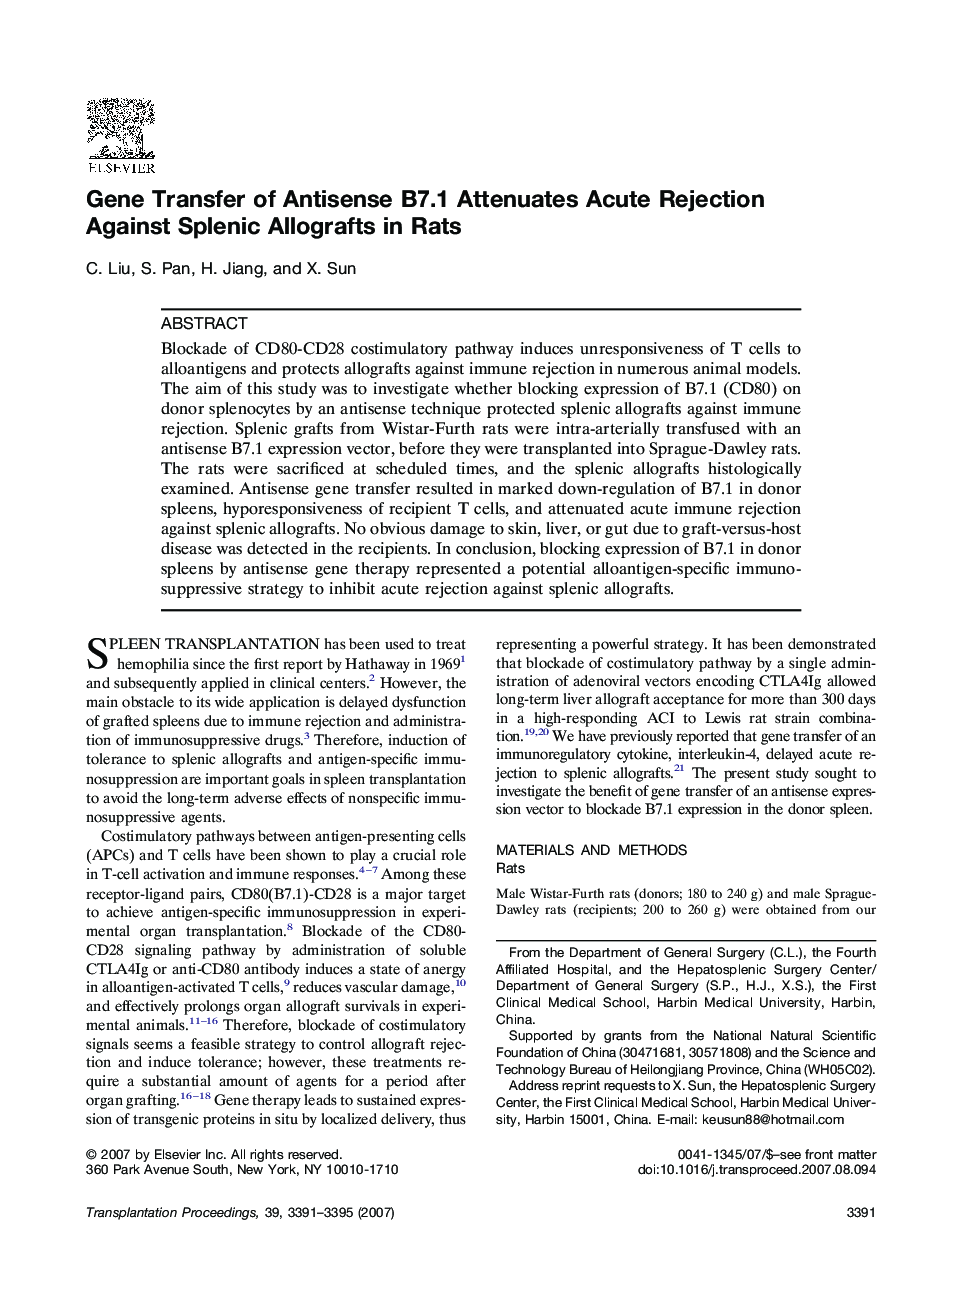 Gene Transfer of Antisense B7.1 Attenuates Acute Rejection Against Splenic Allografts in Rats 